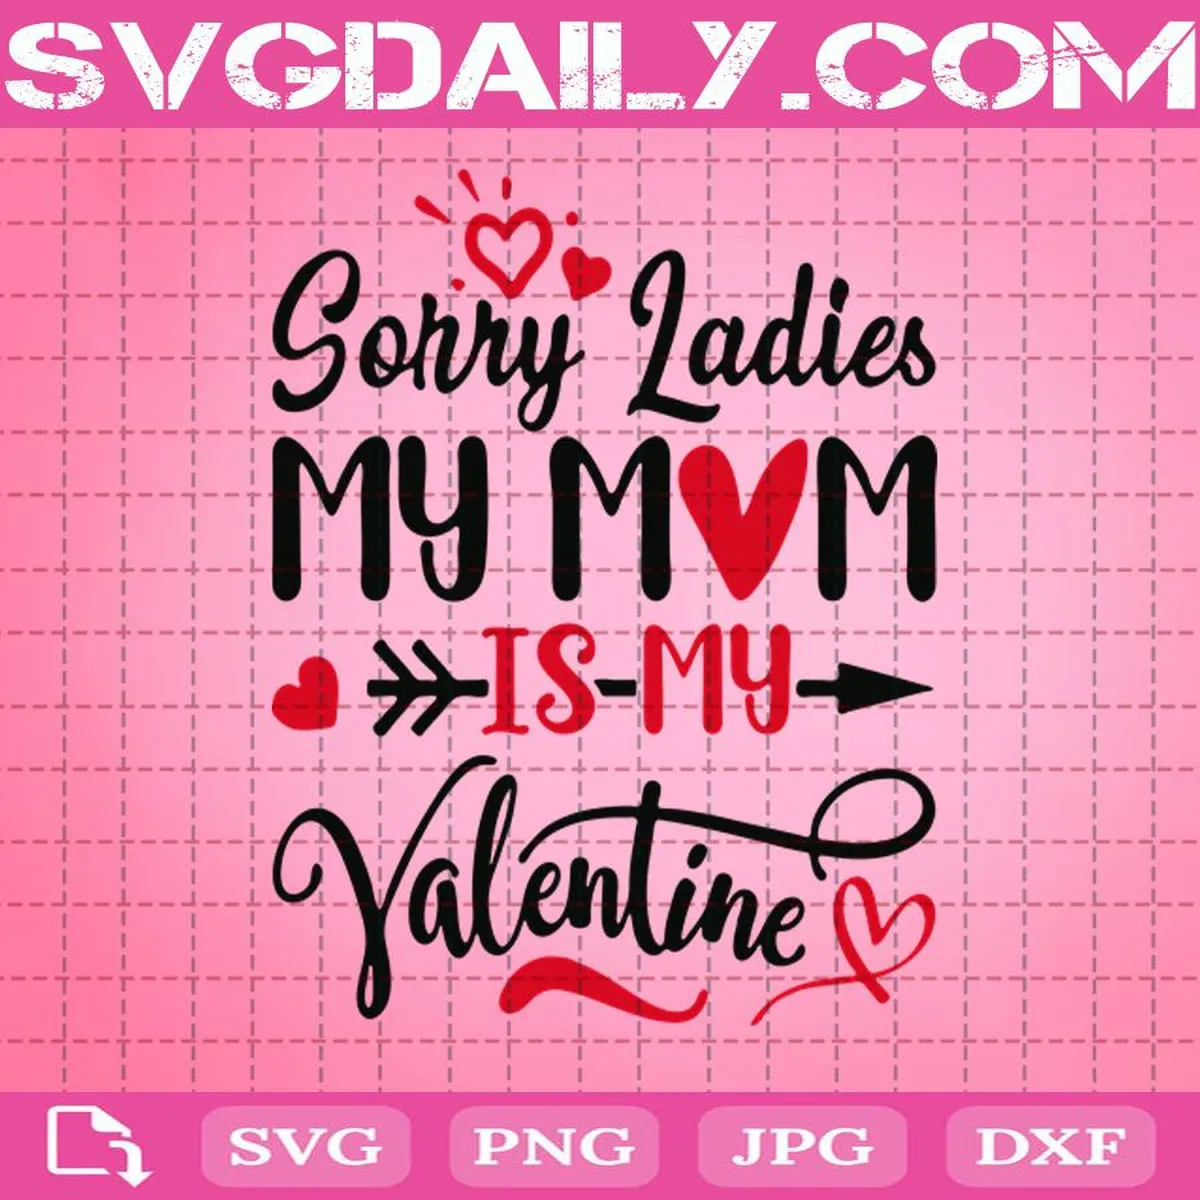 Sorry Ladies My Mom Is My Valentine Svg, Happy Valentine’s Day Svg, Love Mommy Svg, Valentine’s Day Svg